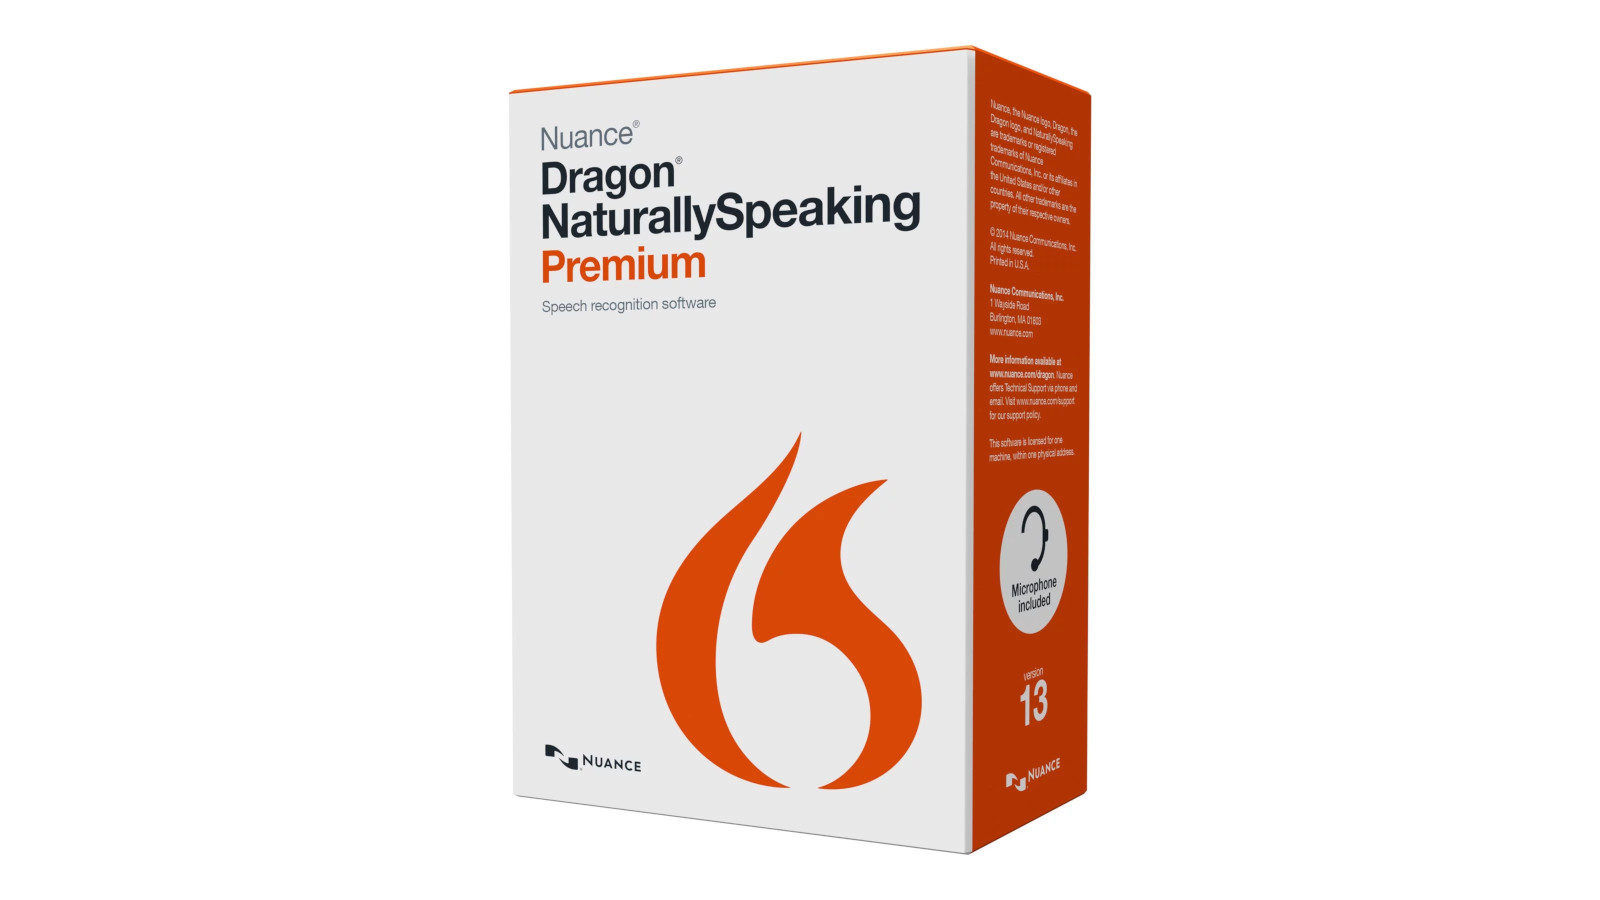 [$ 13.73] Nuance Dragon NaturallySpeaking Premium 13 Key (Lifetime / 1 PC)